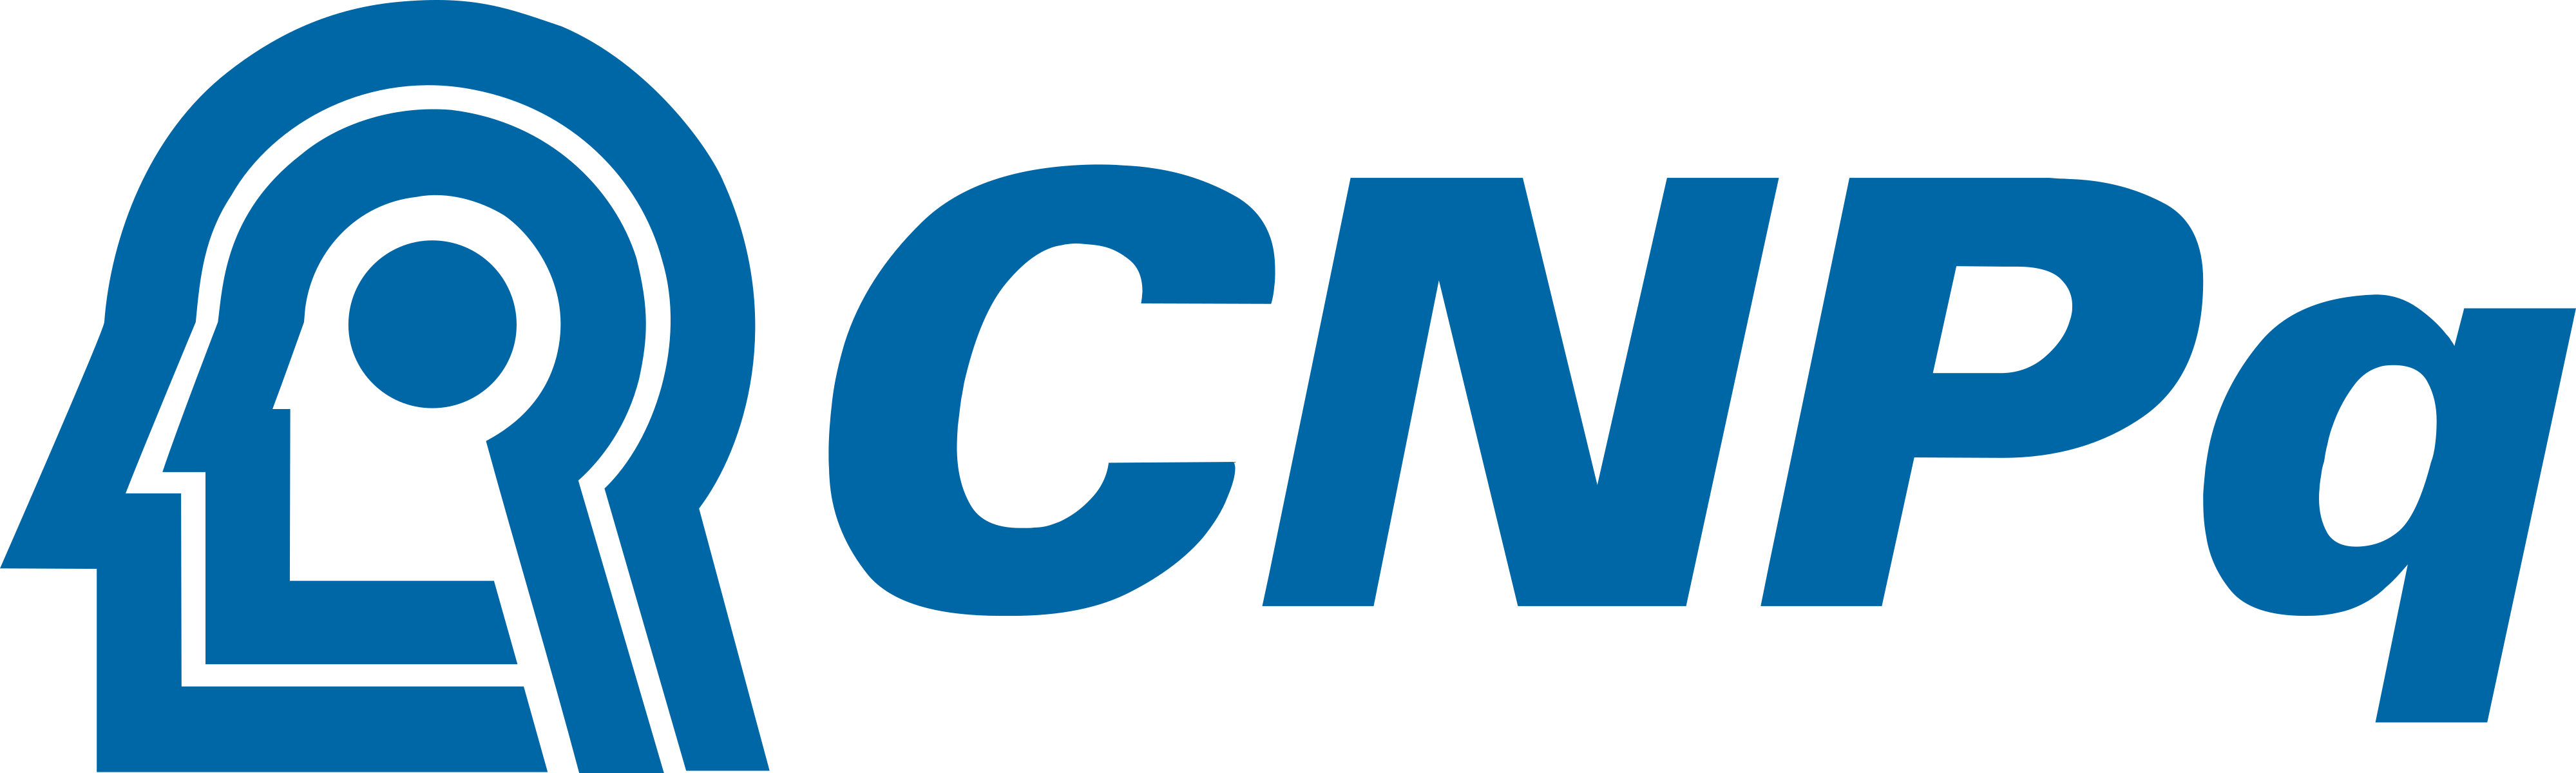 cnpq logo 7